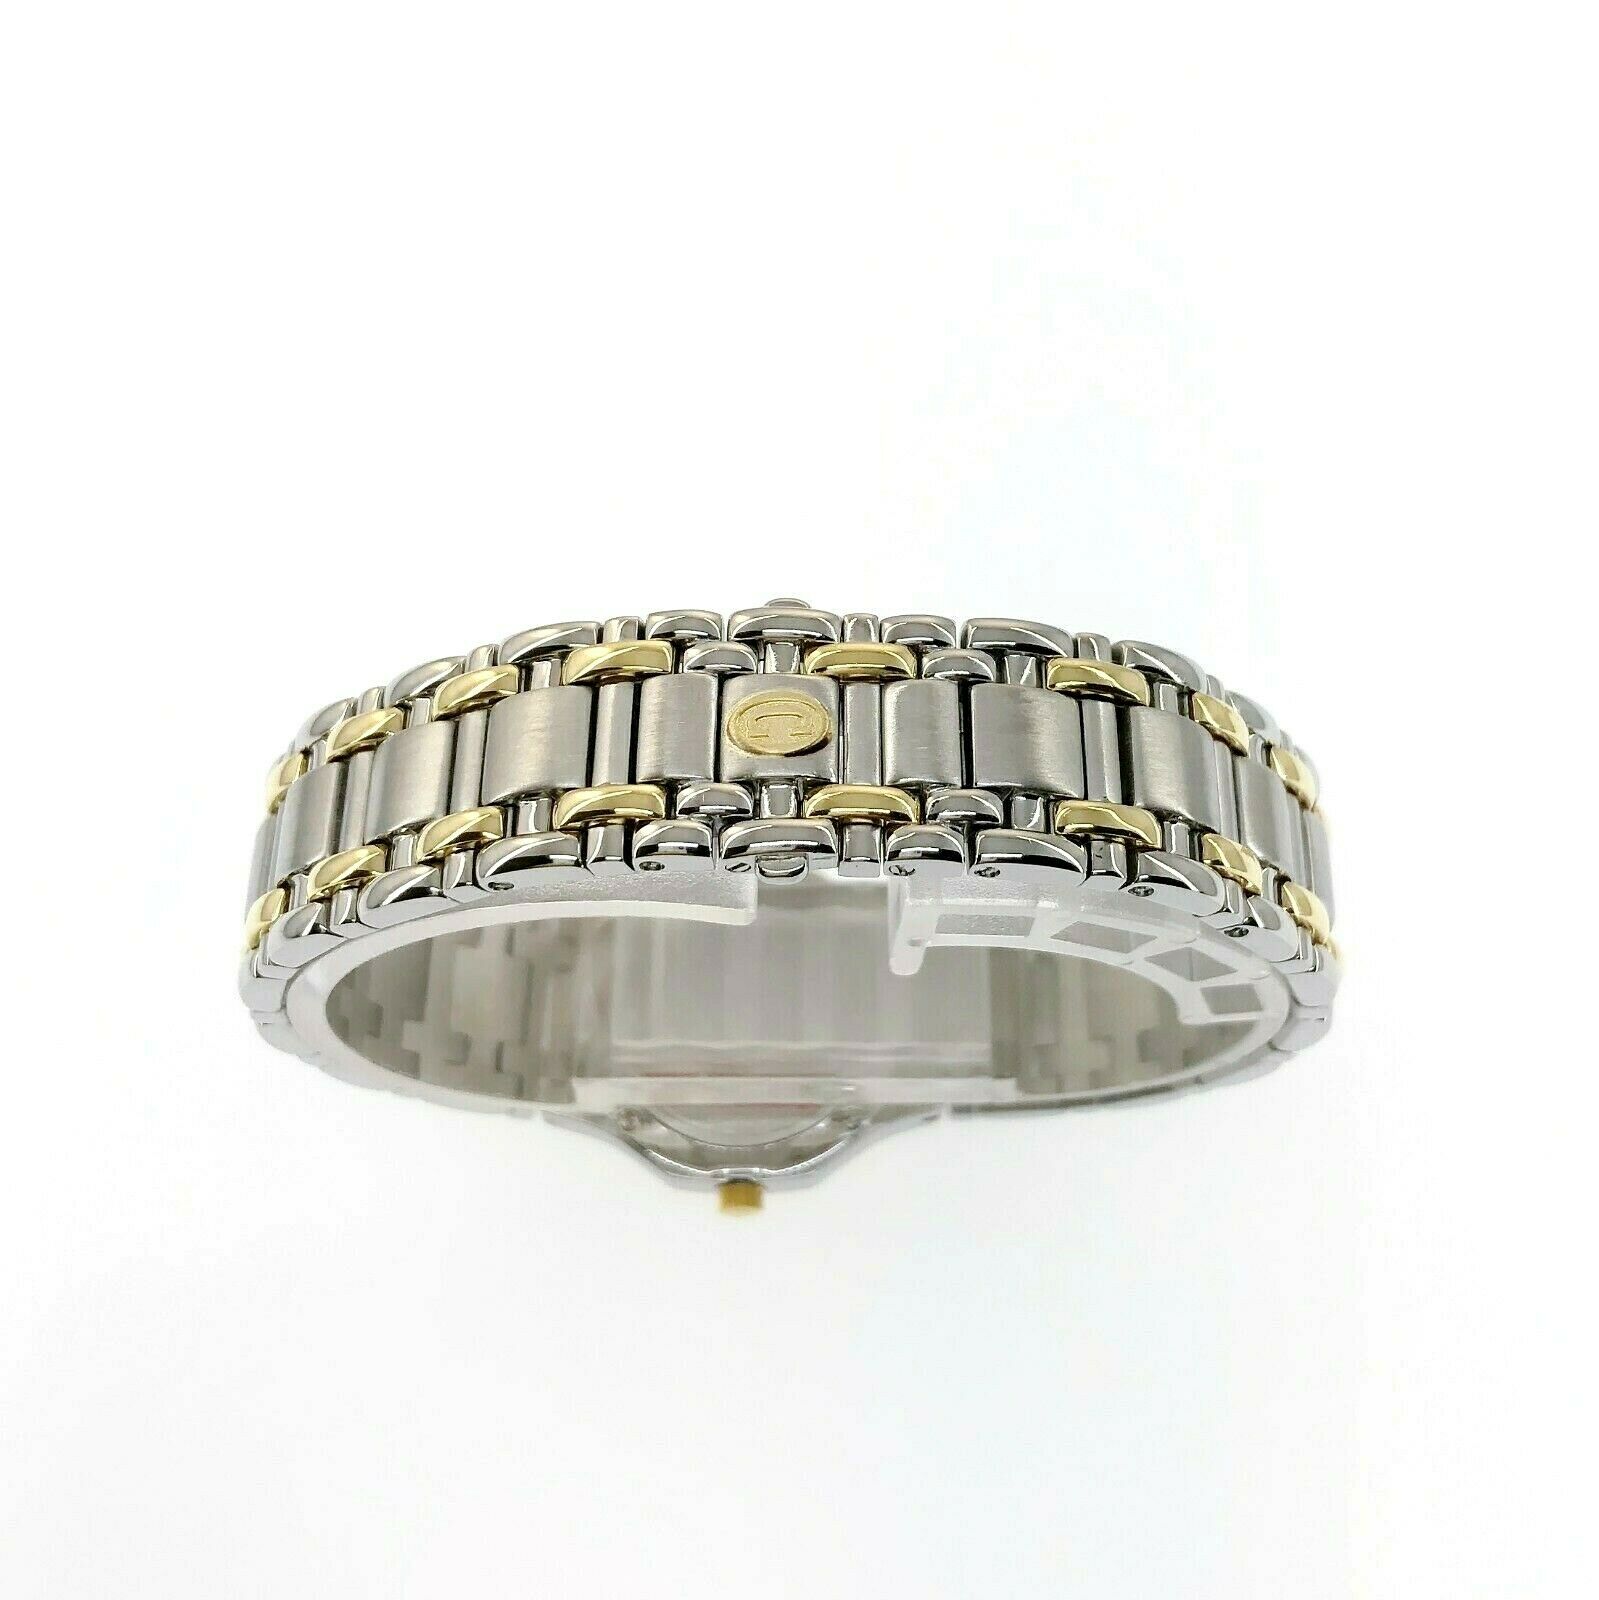 Lady's Concord Saratoga 23mm Factory Set Diamonds Quartz Watch 14K/Stainless